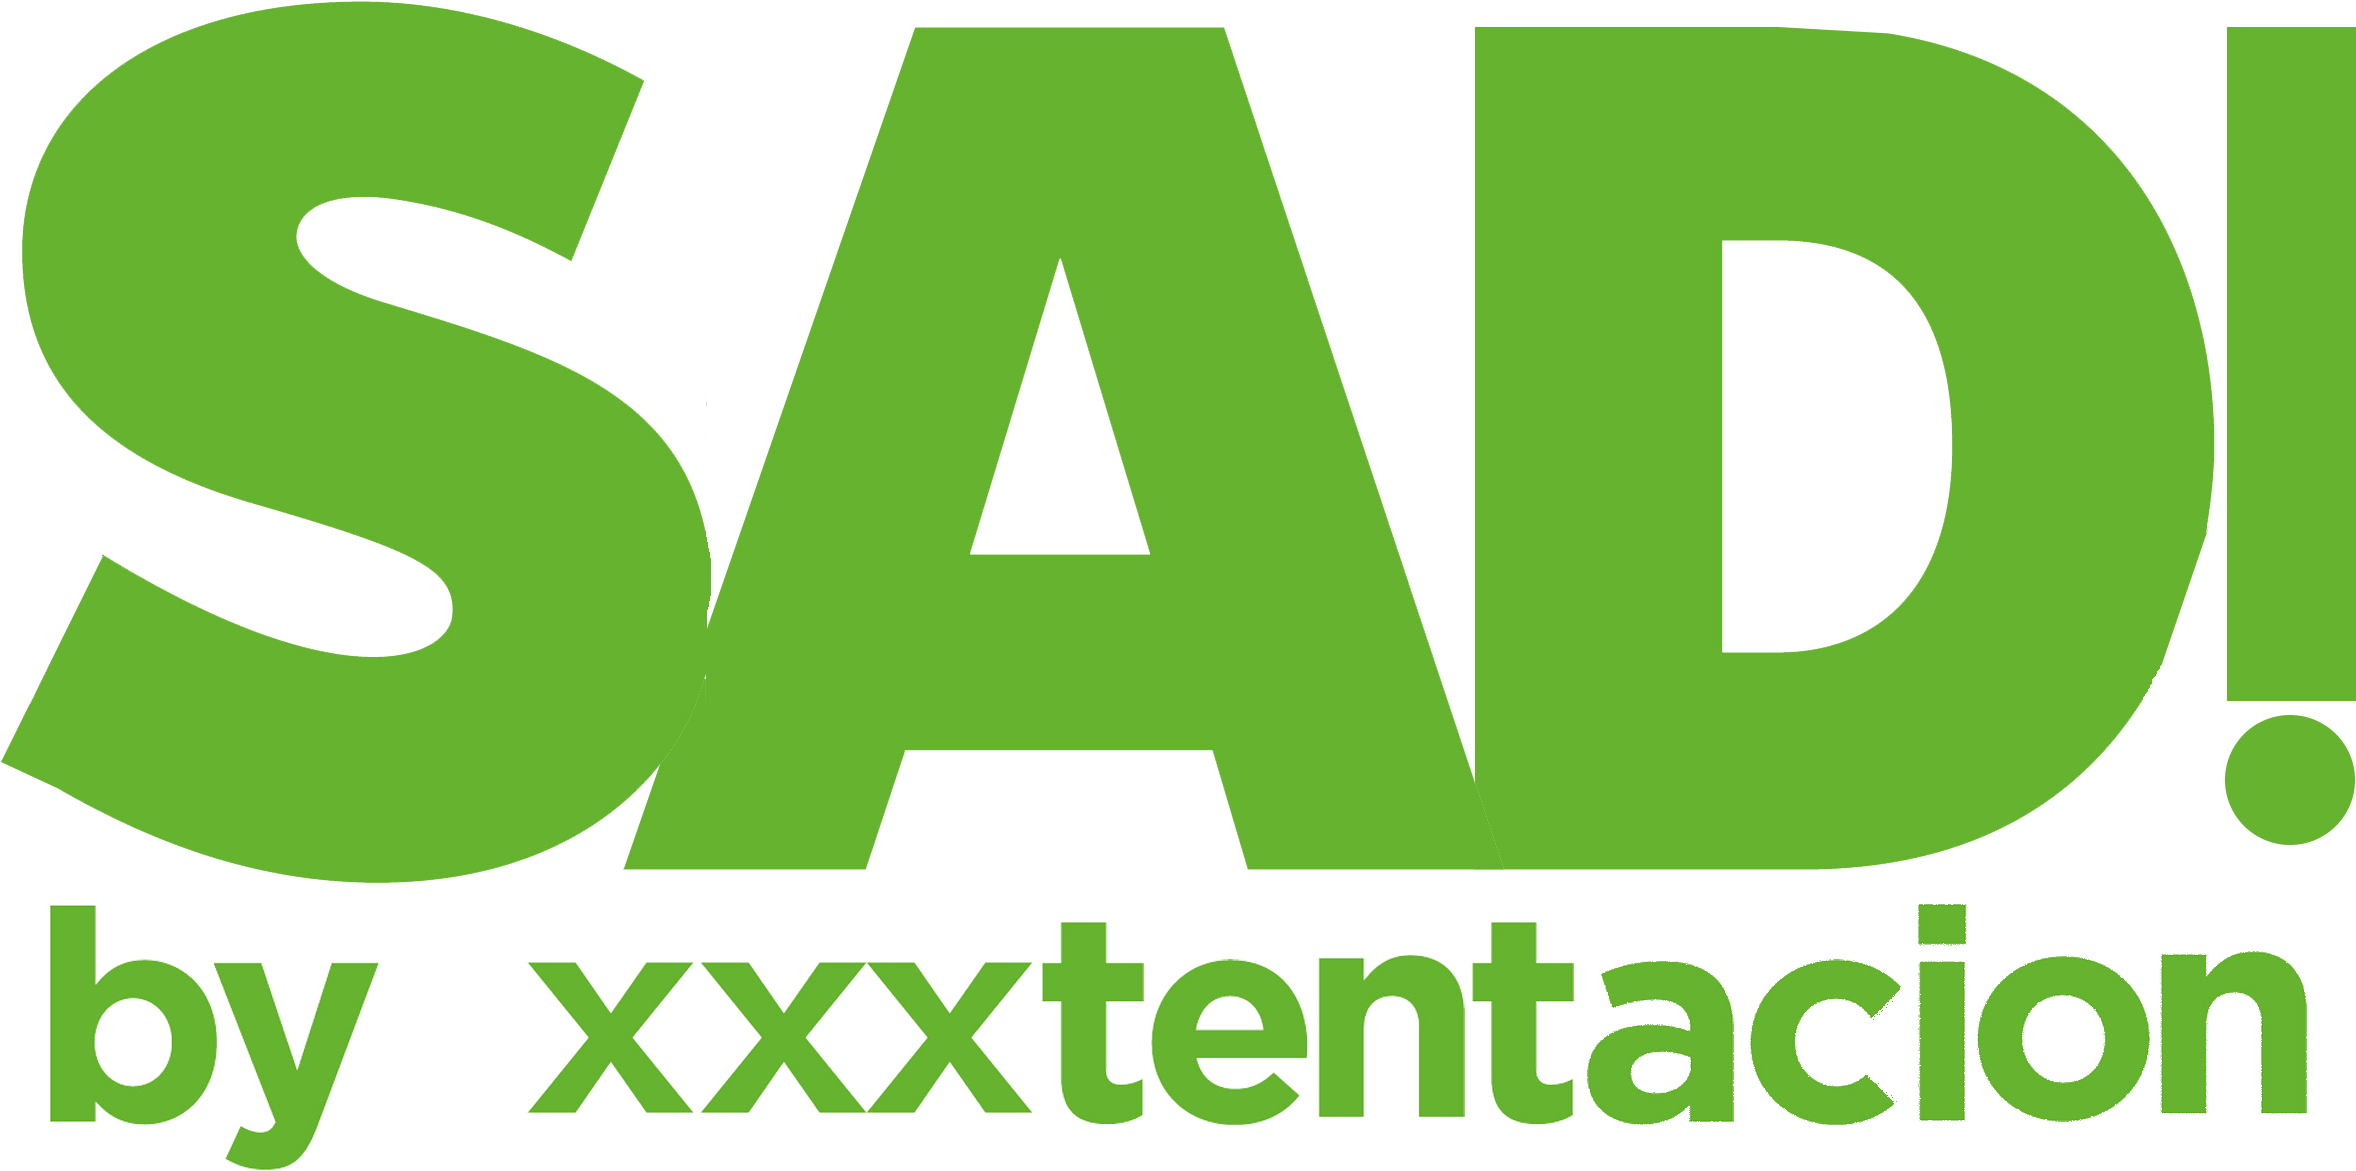 Sad By Xxxtentacioneaten (3050x1266), Png Download